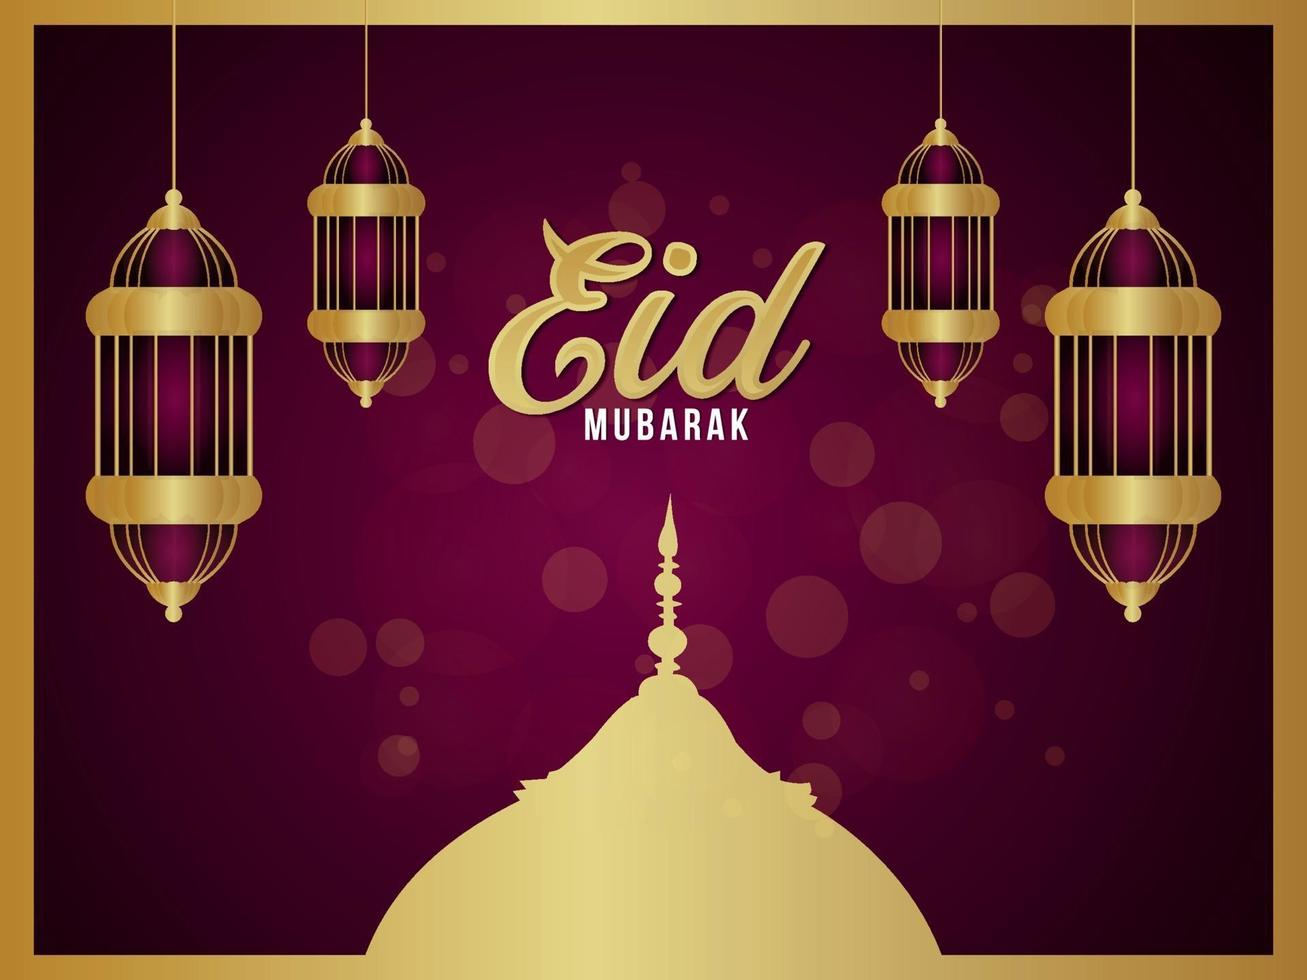 Islamic festival of eid mubarak celebration greeting card with golden lantern vector